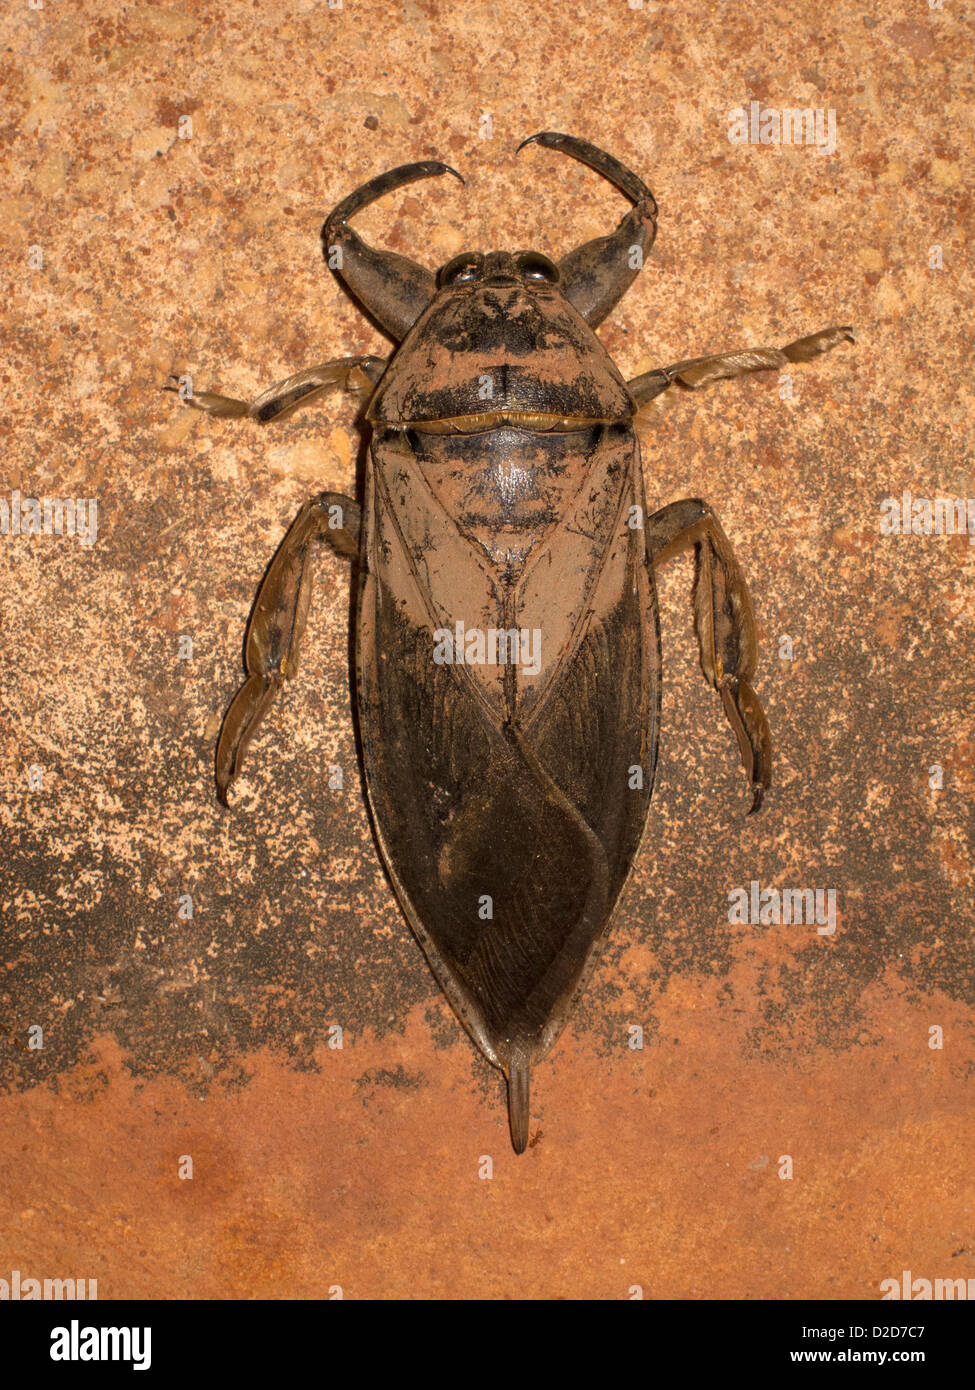 A toe-biter beetle (Belostomatidae), Broome, Western Australia, Australia Stock Photo